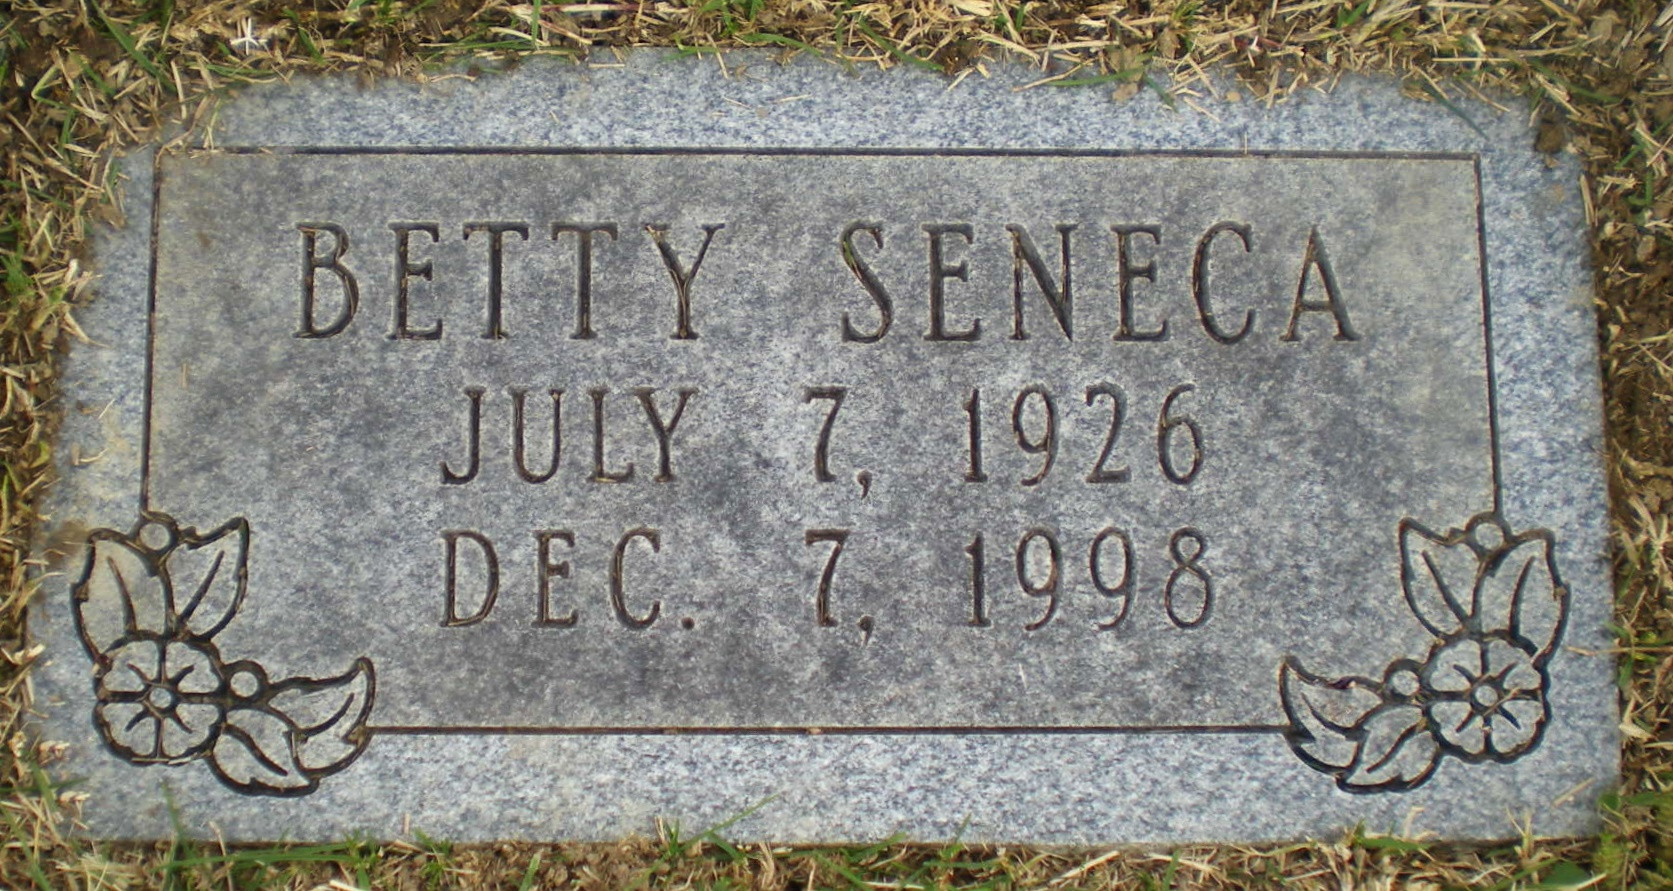 Betty Seneca Gravesite